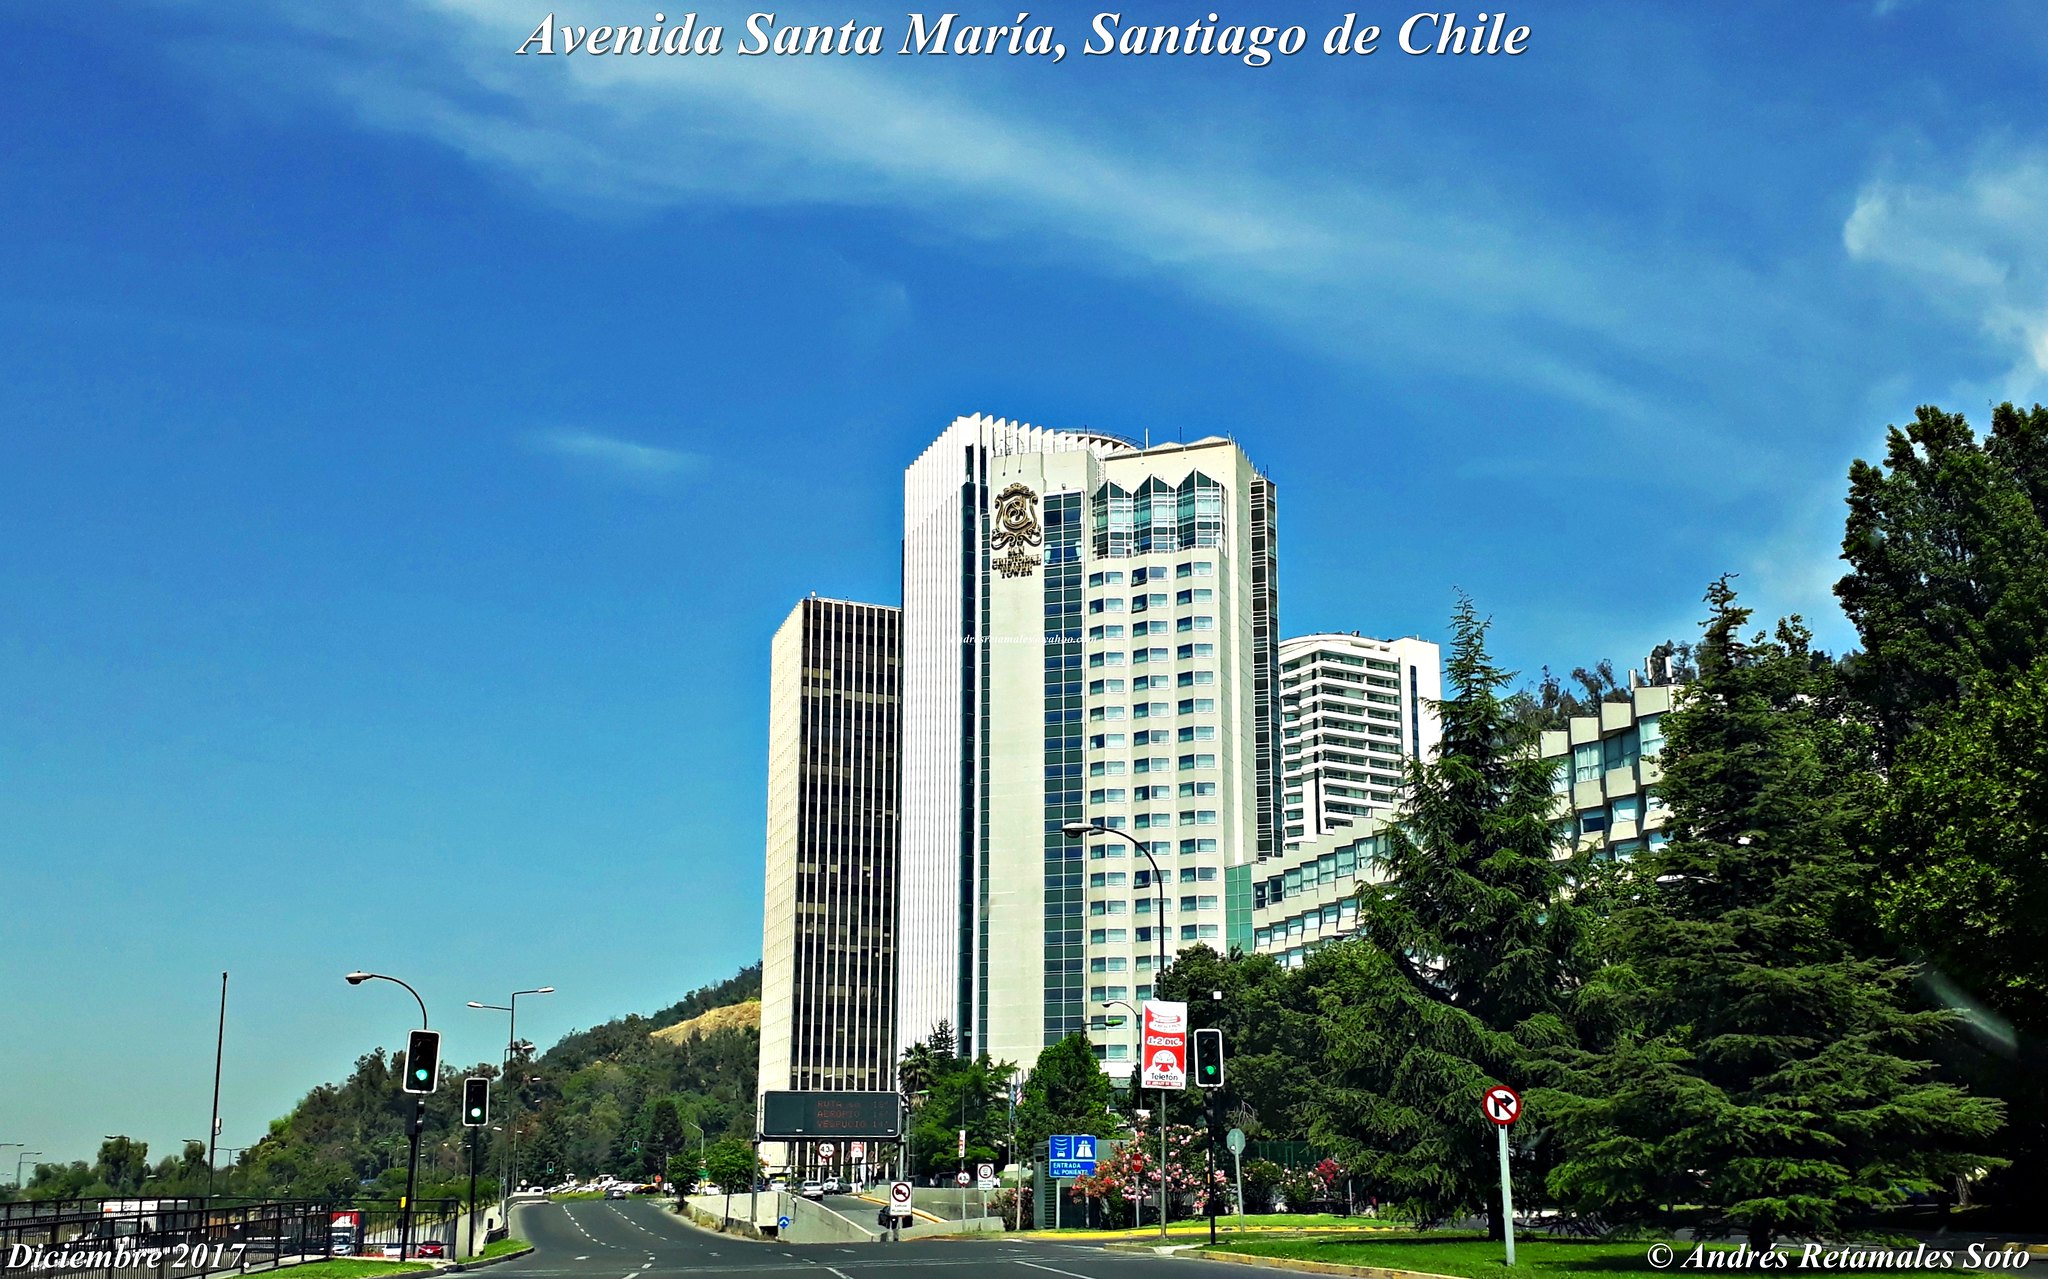 Avenida Santa María, Santiago de Chile, Diciembre 2017